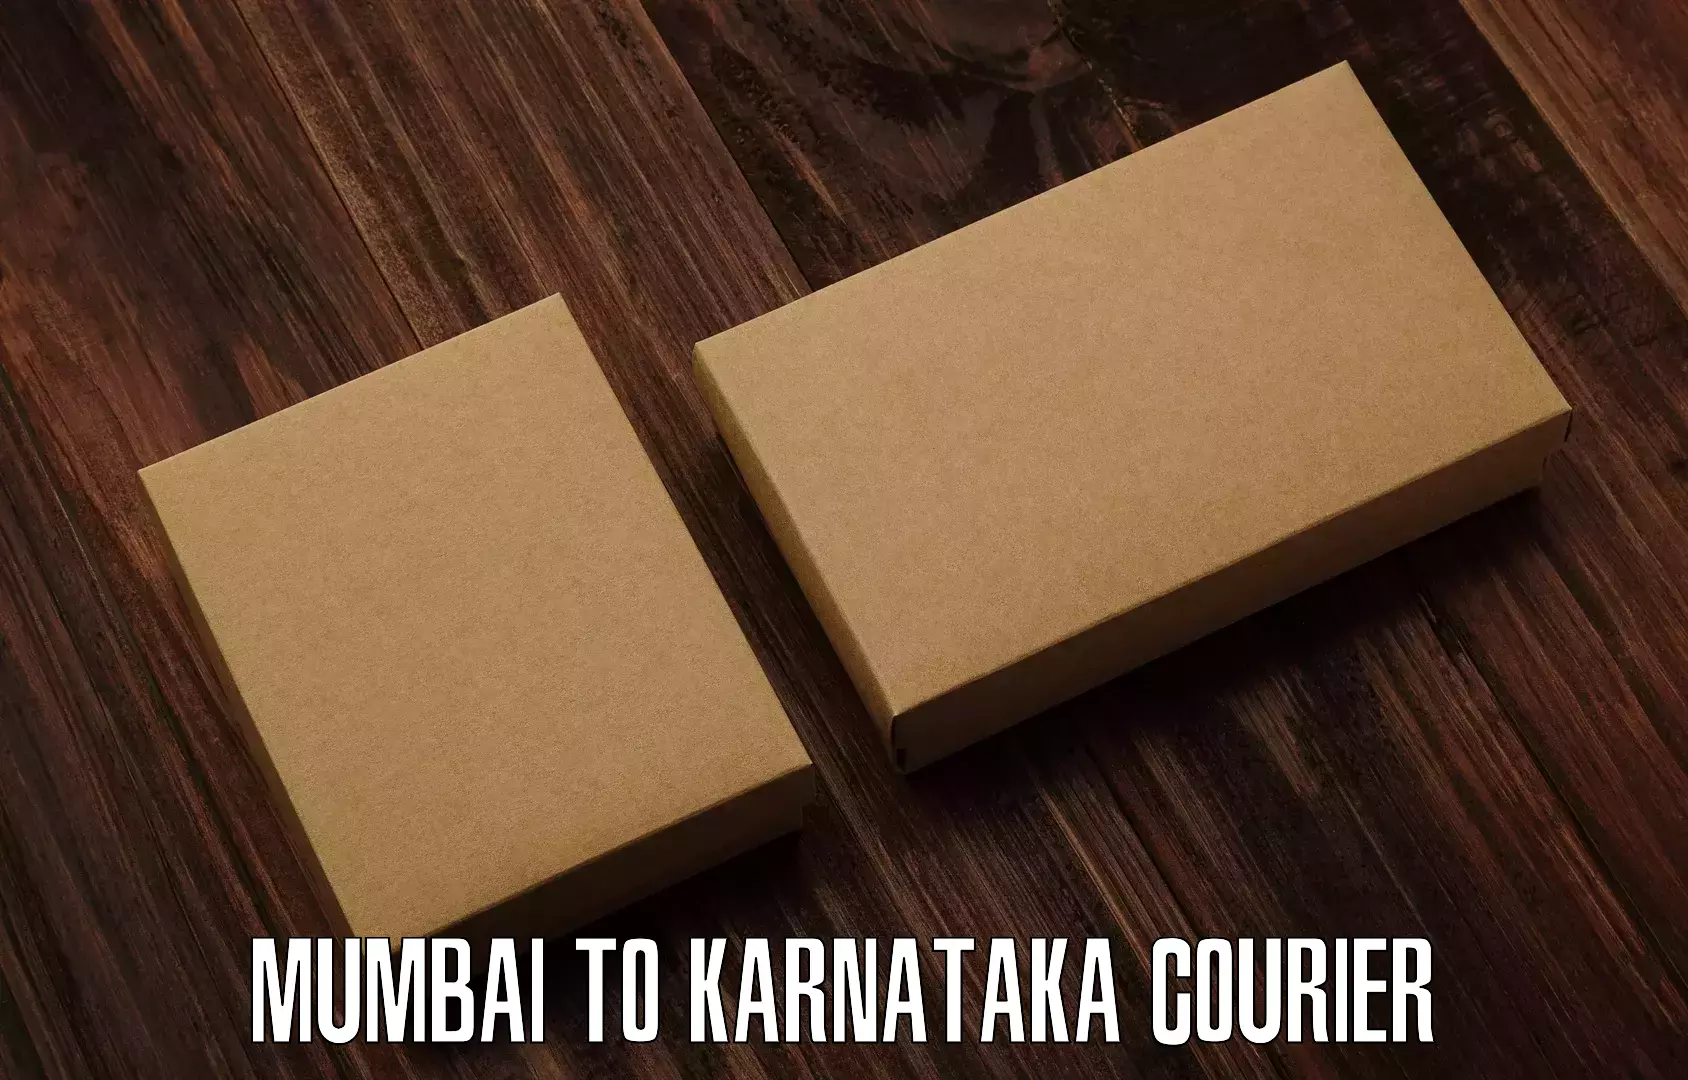 Courier service partnerships Mumbai to Dakshina Kannada